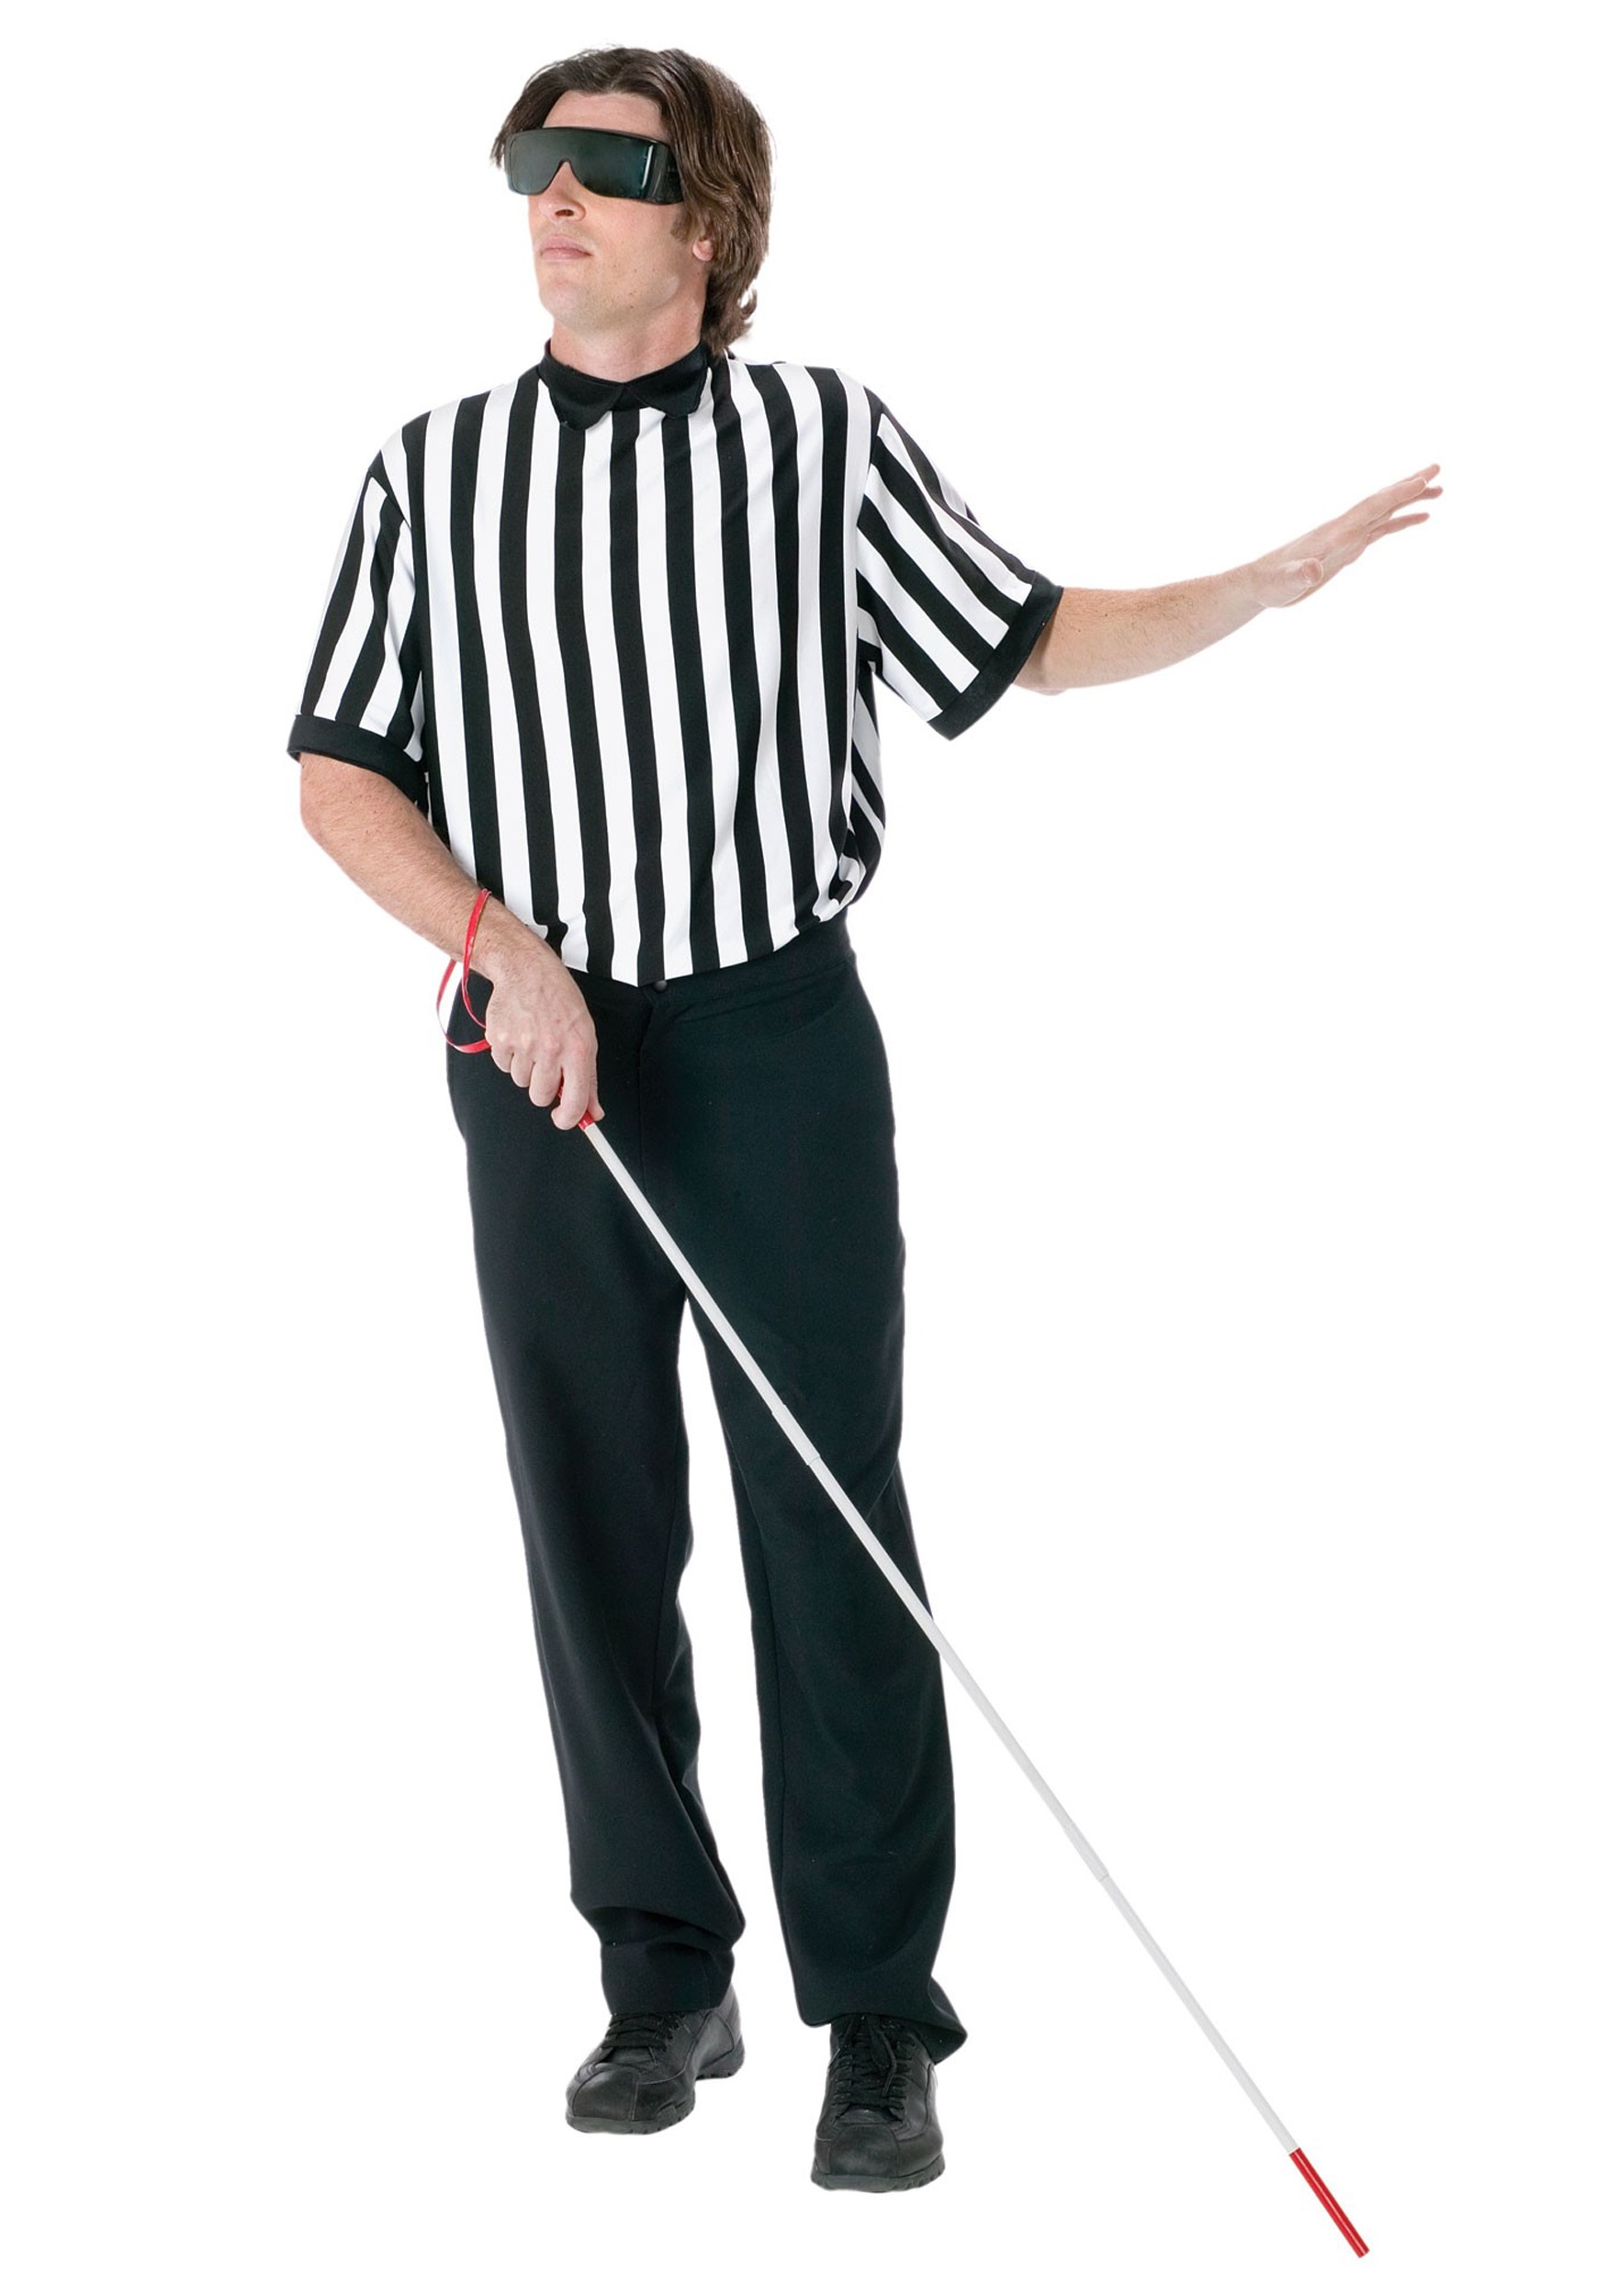 blind-referee-costume.jpg